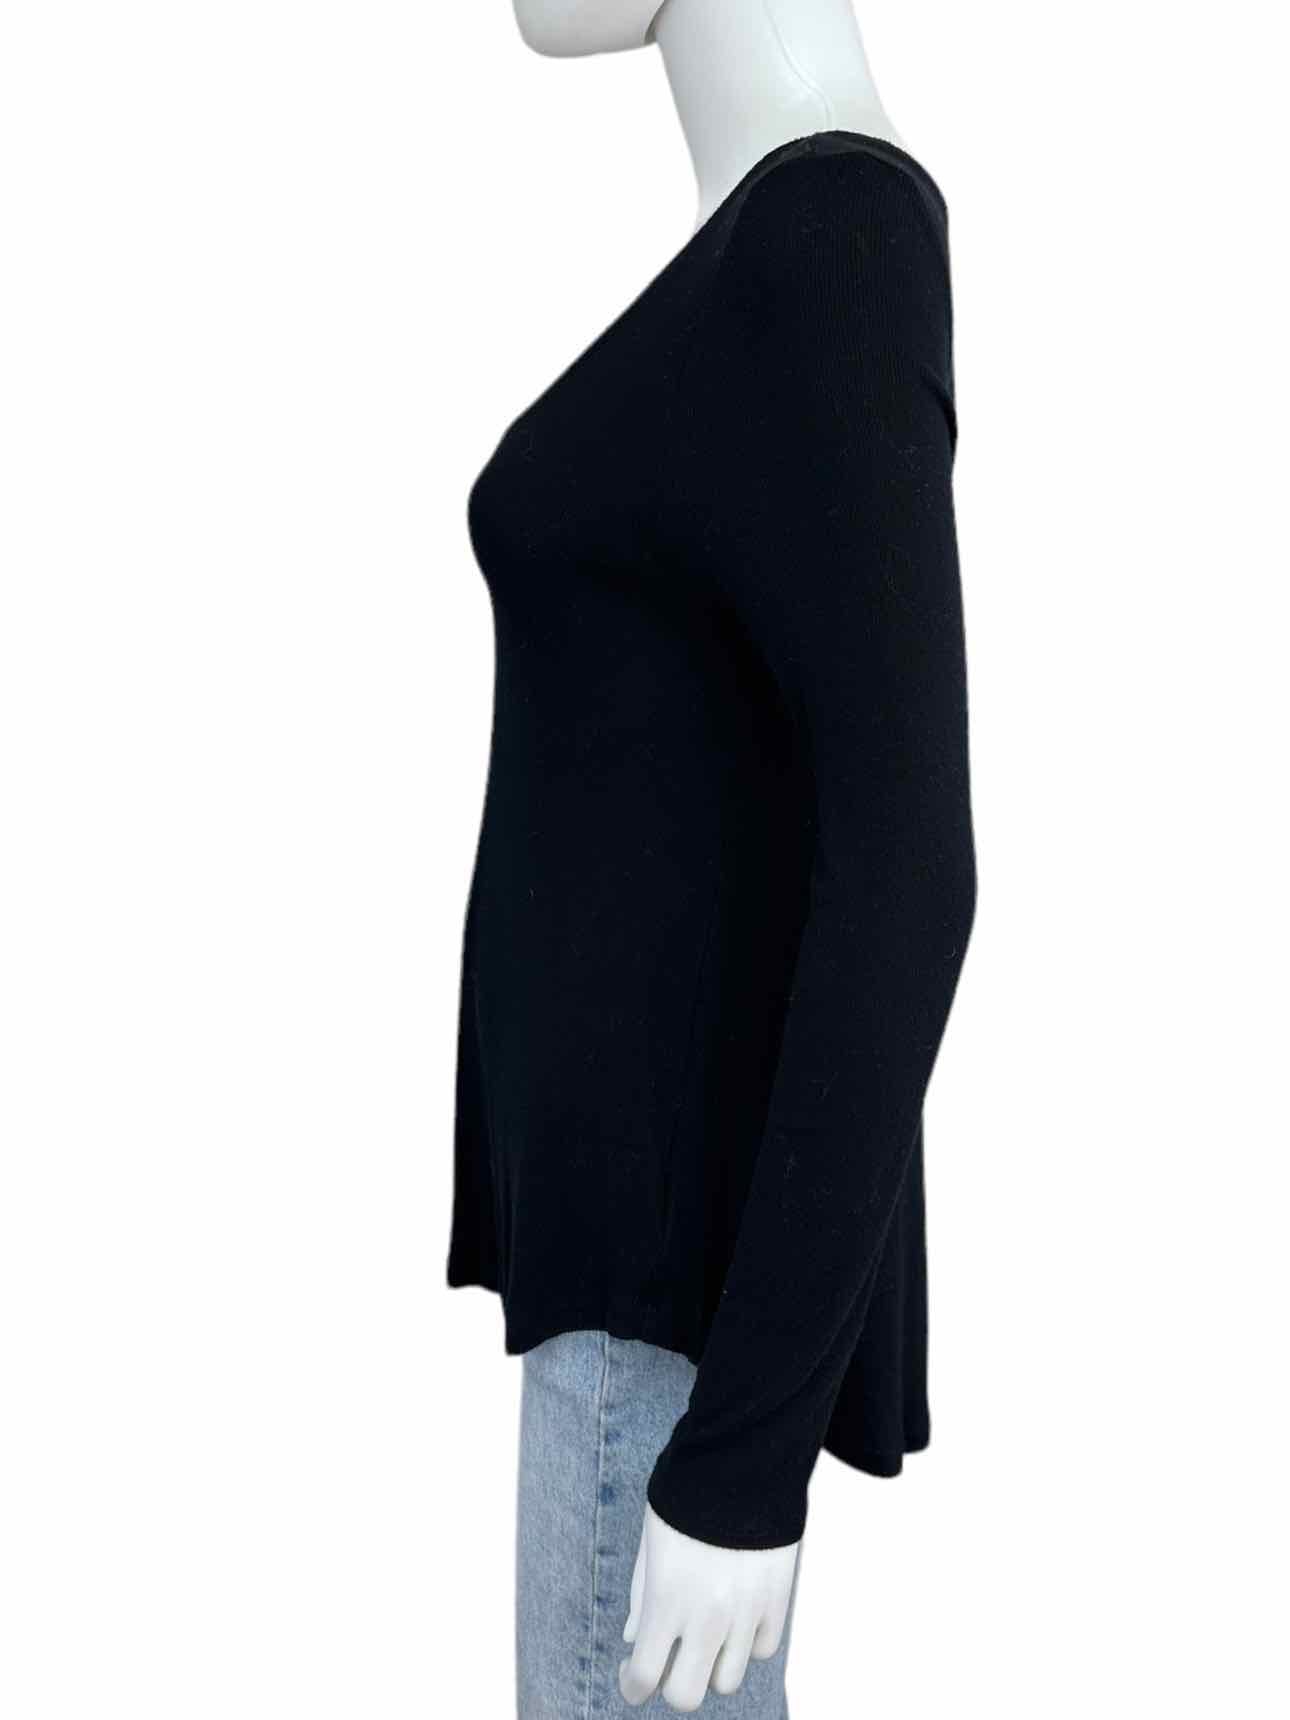 WHITE + WARREN Black Ribbed Stretch Knit Top Size S